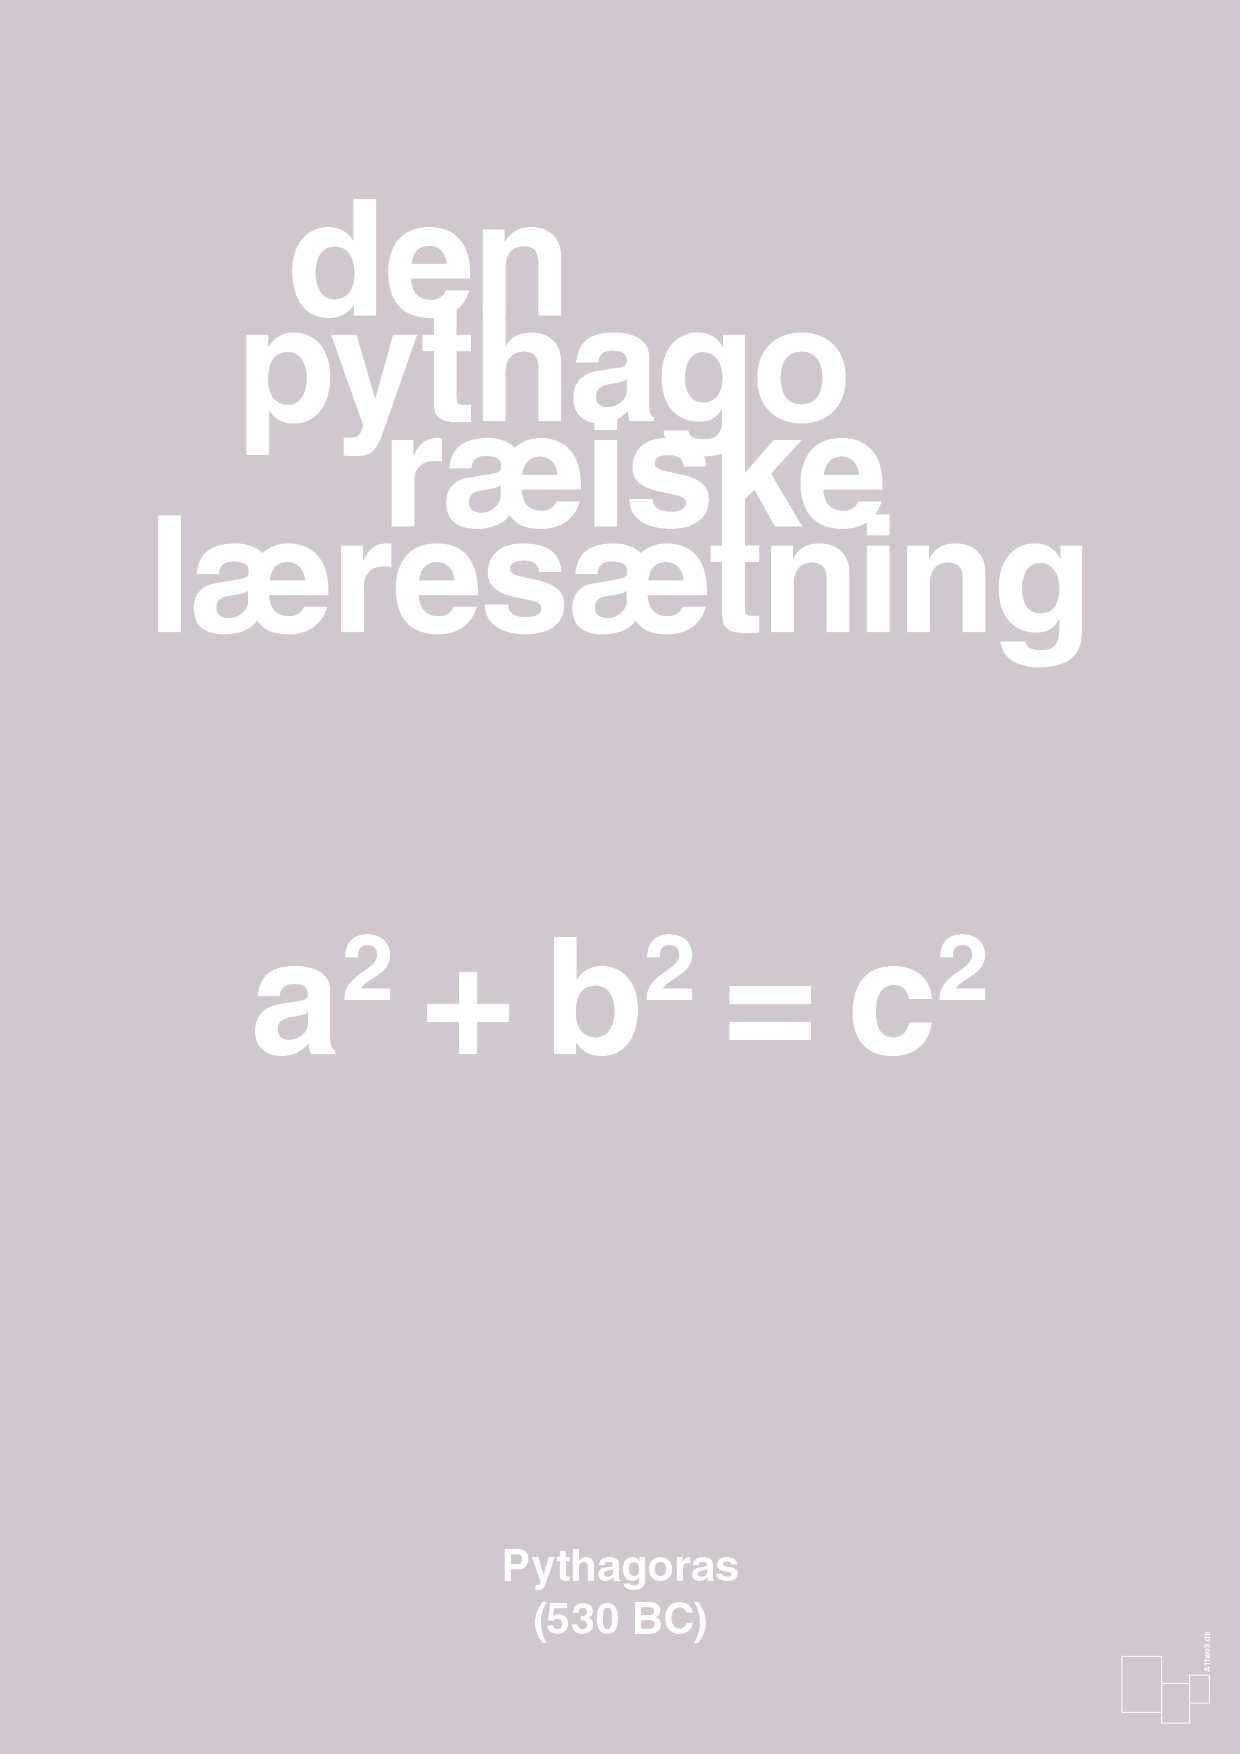 den pythagoræiske læresætning - Plakat med Videnskab i Dusty Lilac